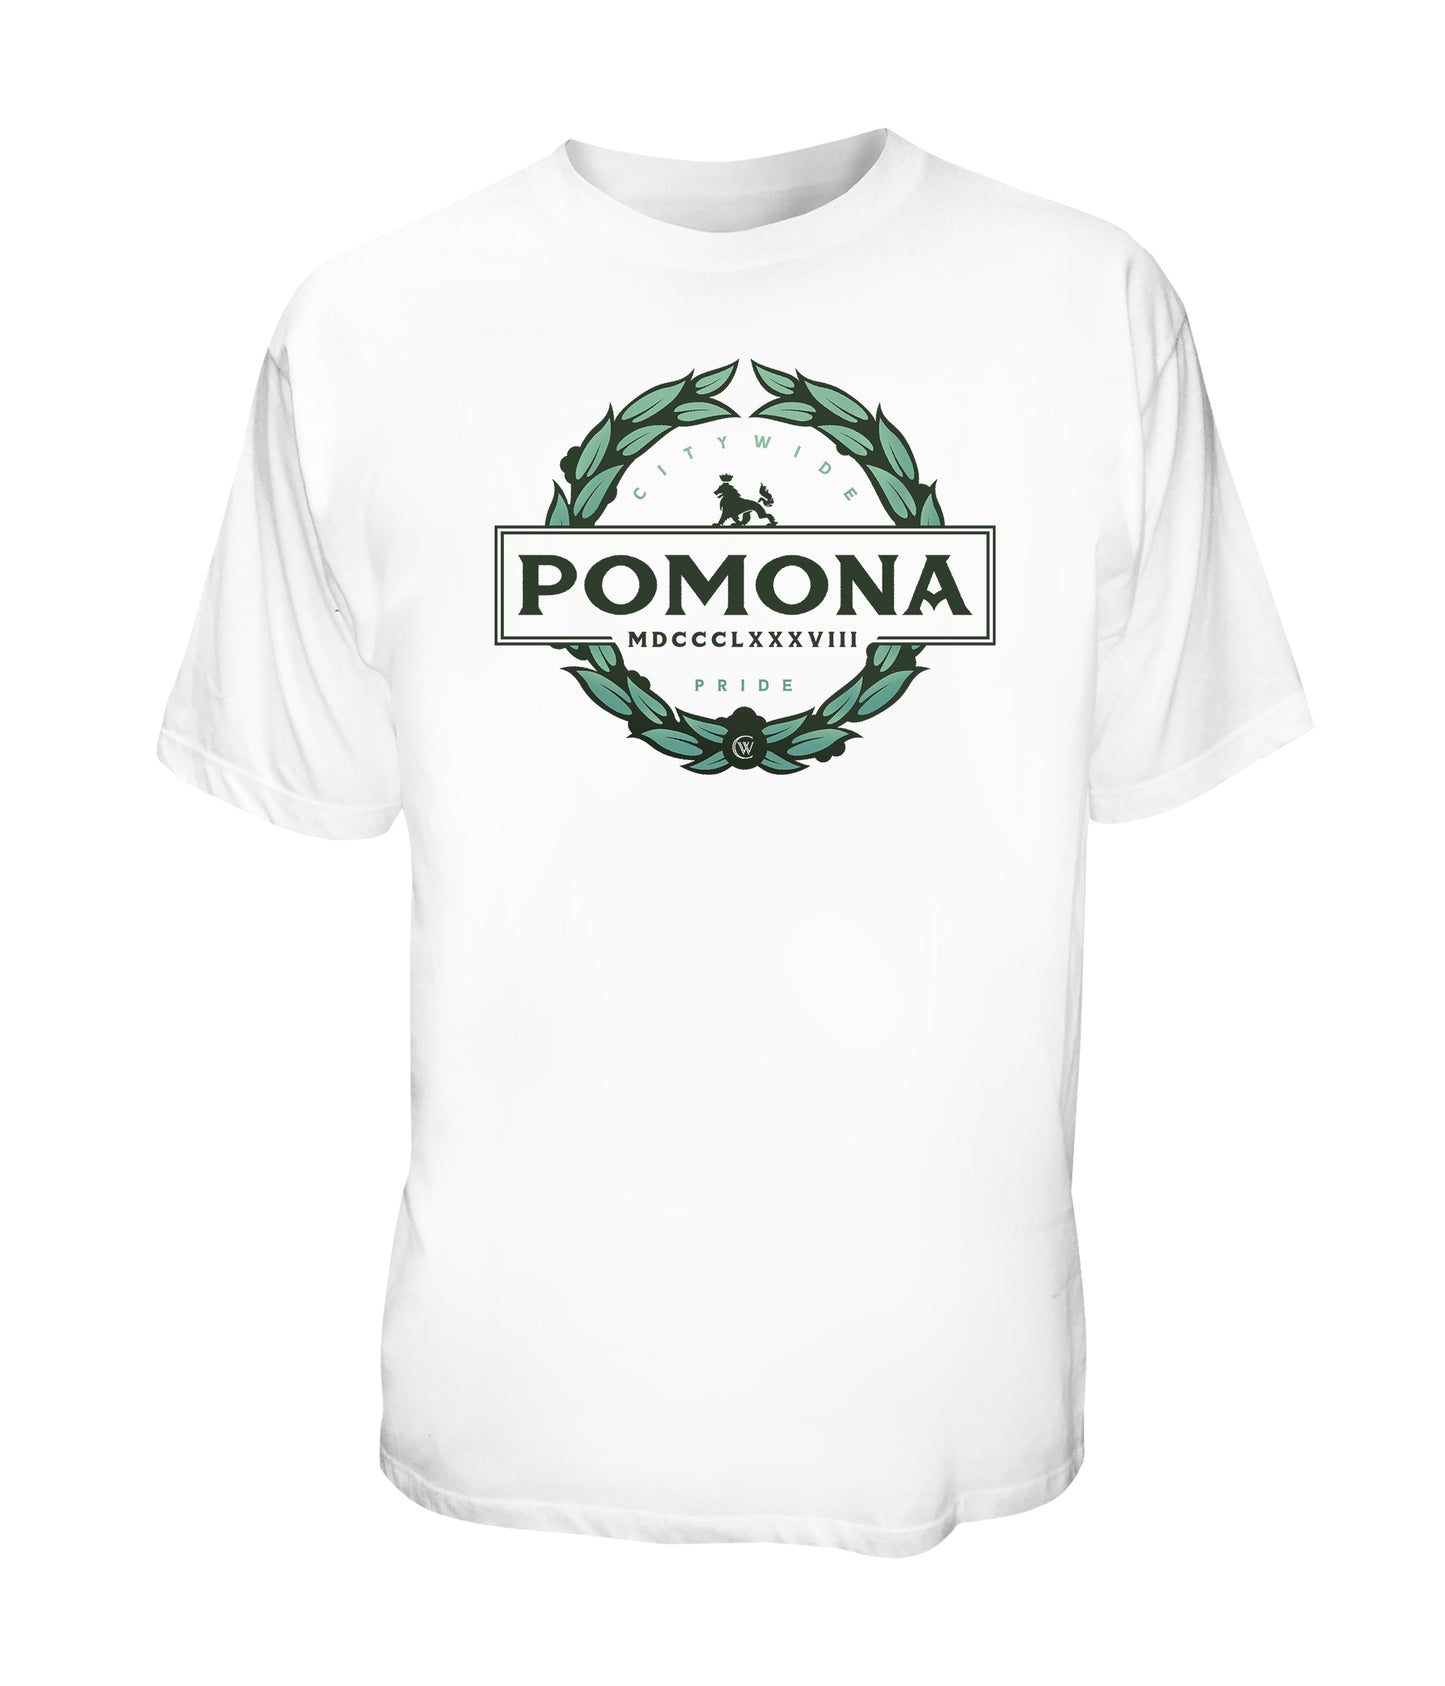 Pomona The Pride